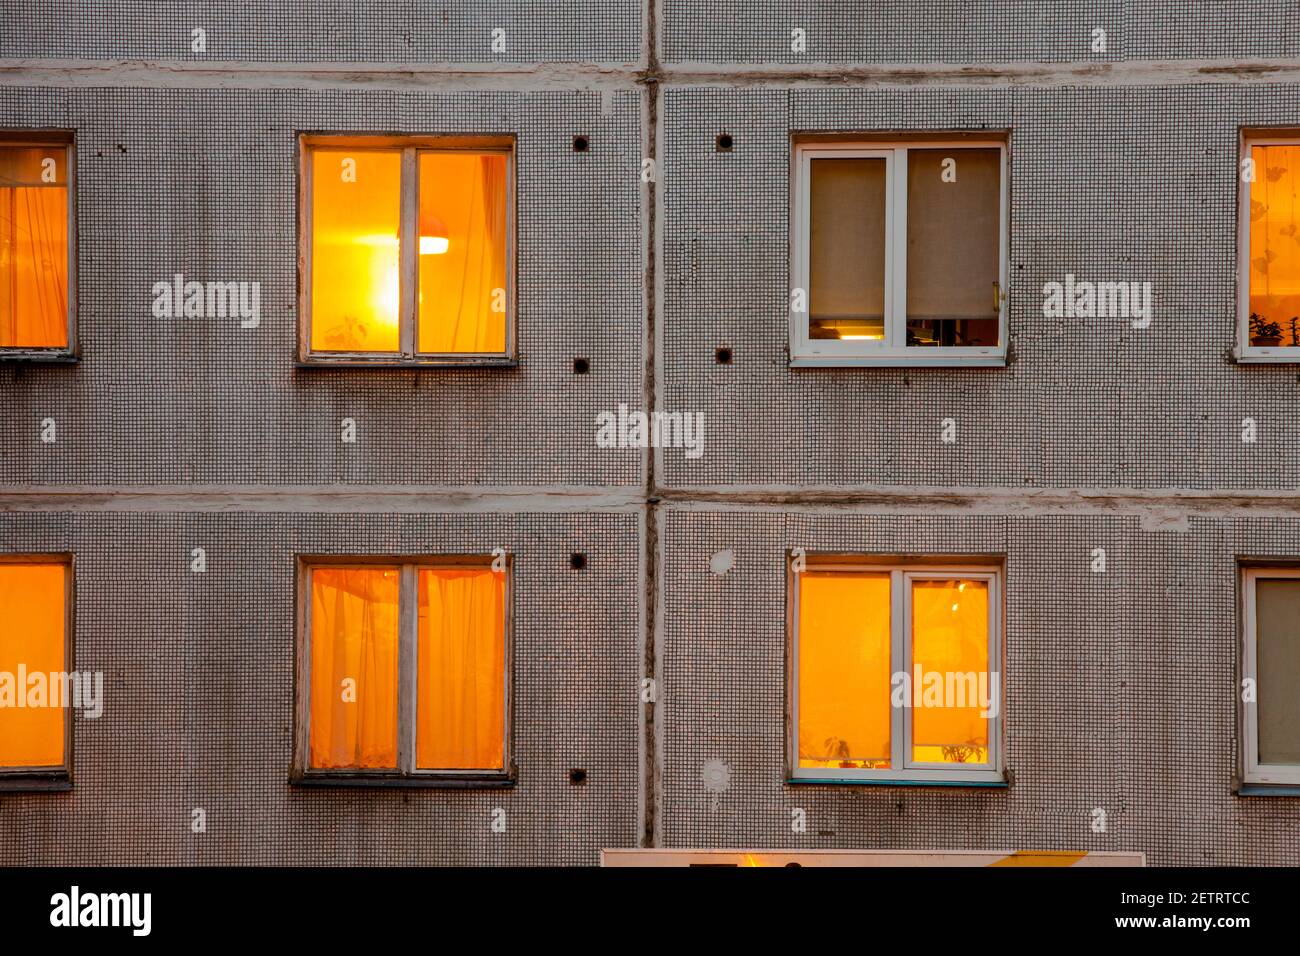 Wall with Iluminated windows of soviet era block apartment building. Stock Photo